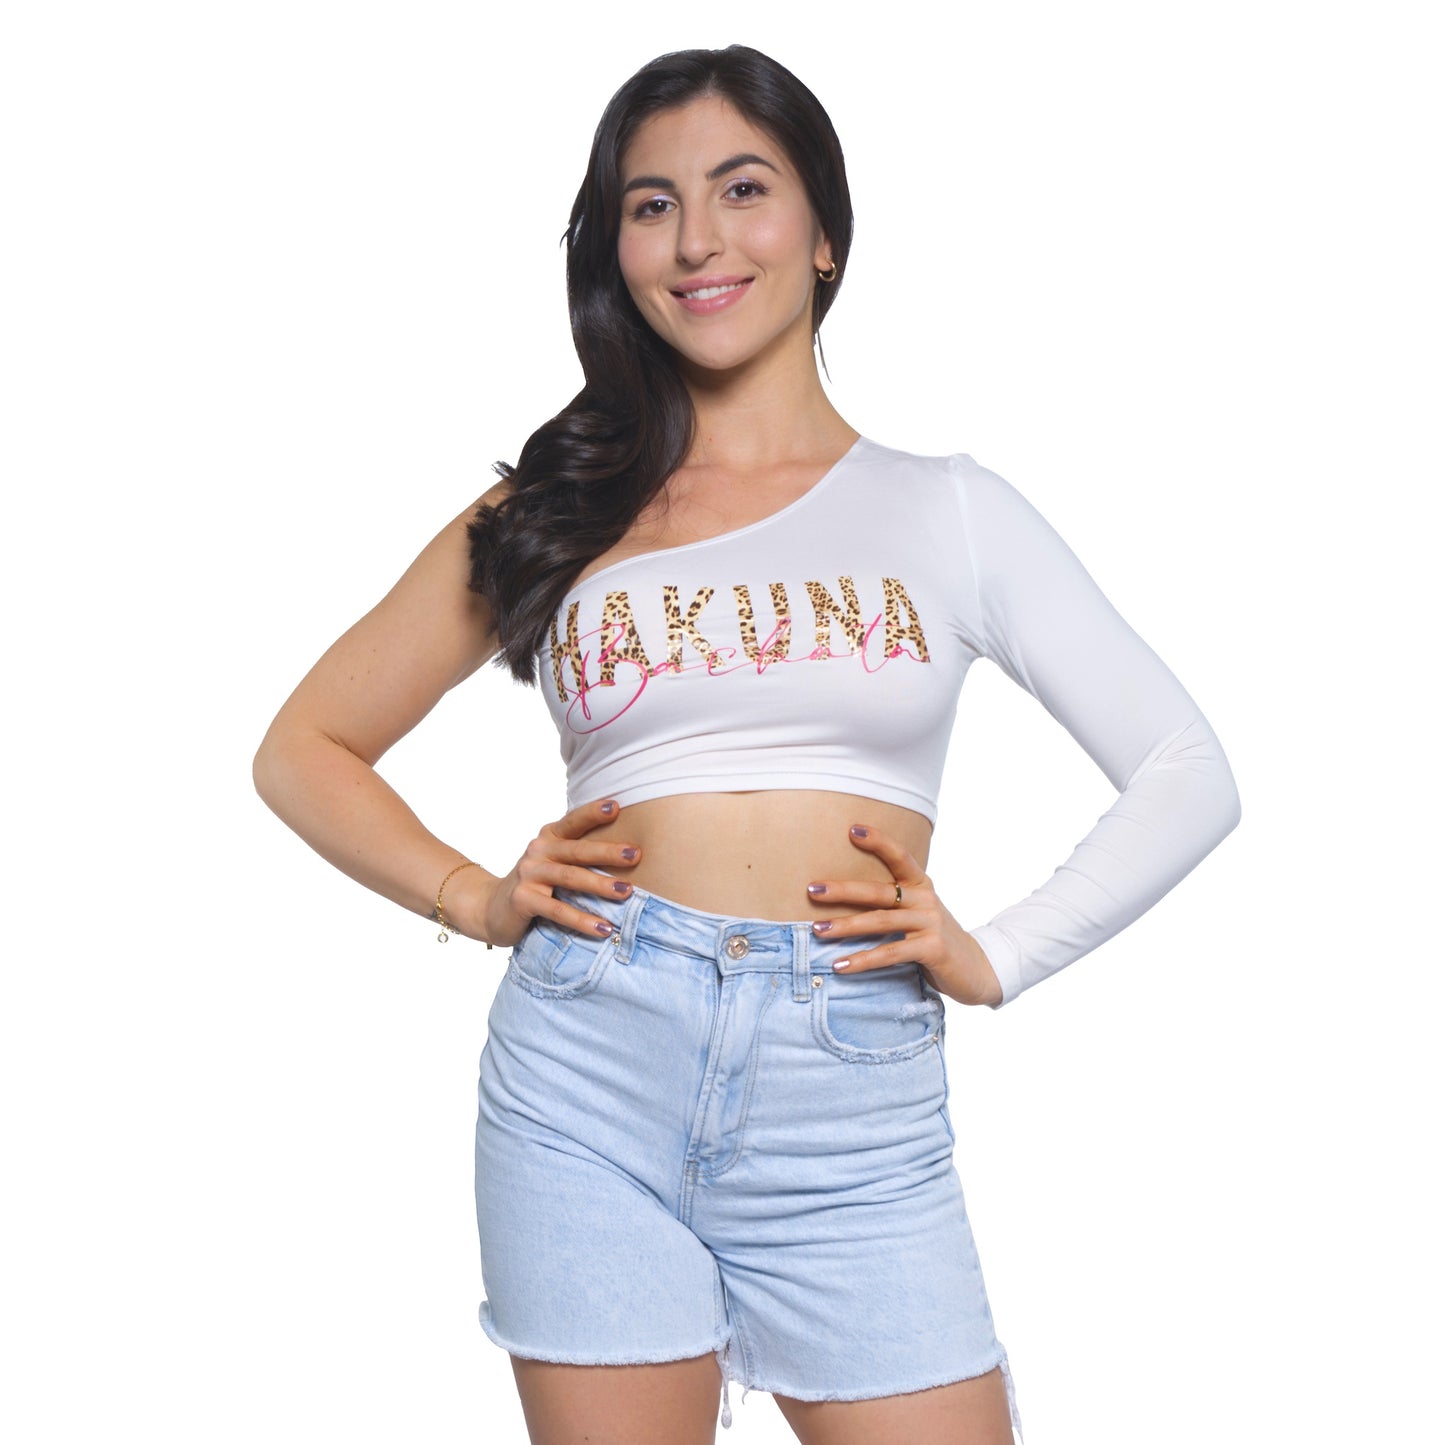 Asymmetric top for women "Bachata Sirena" - White with logo options - Hakuna Bachata